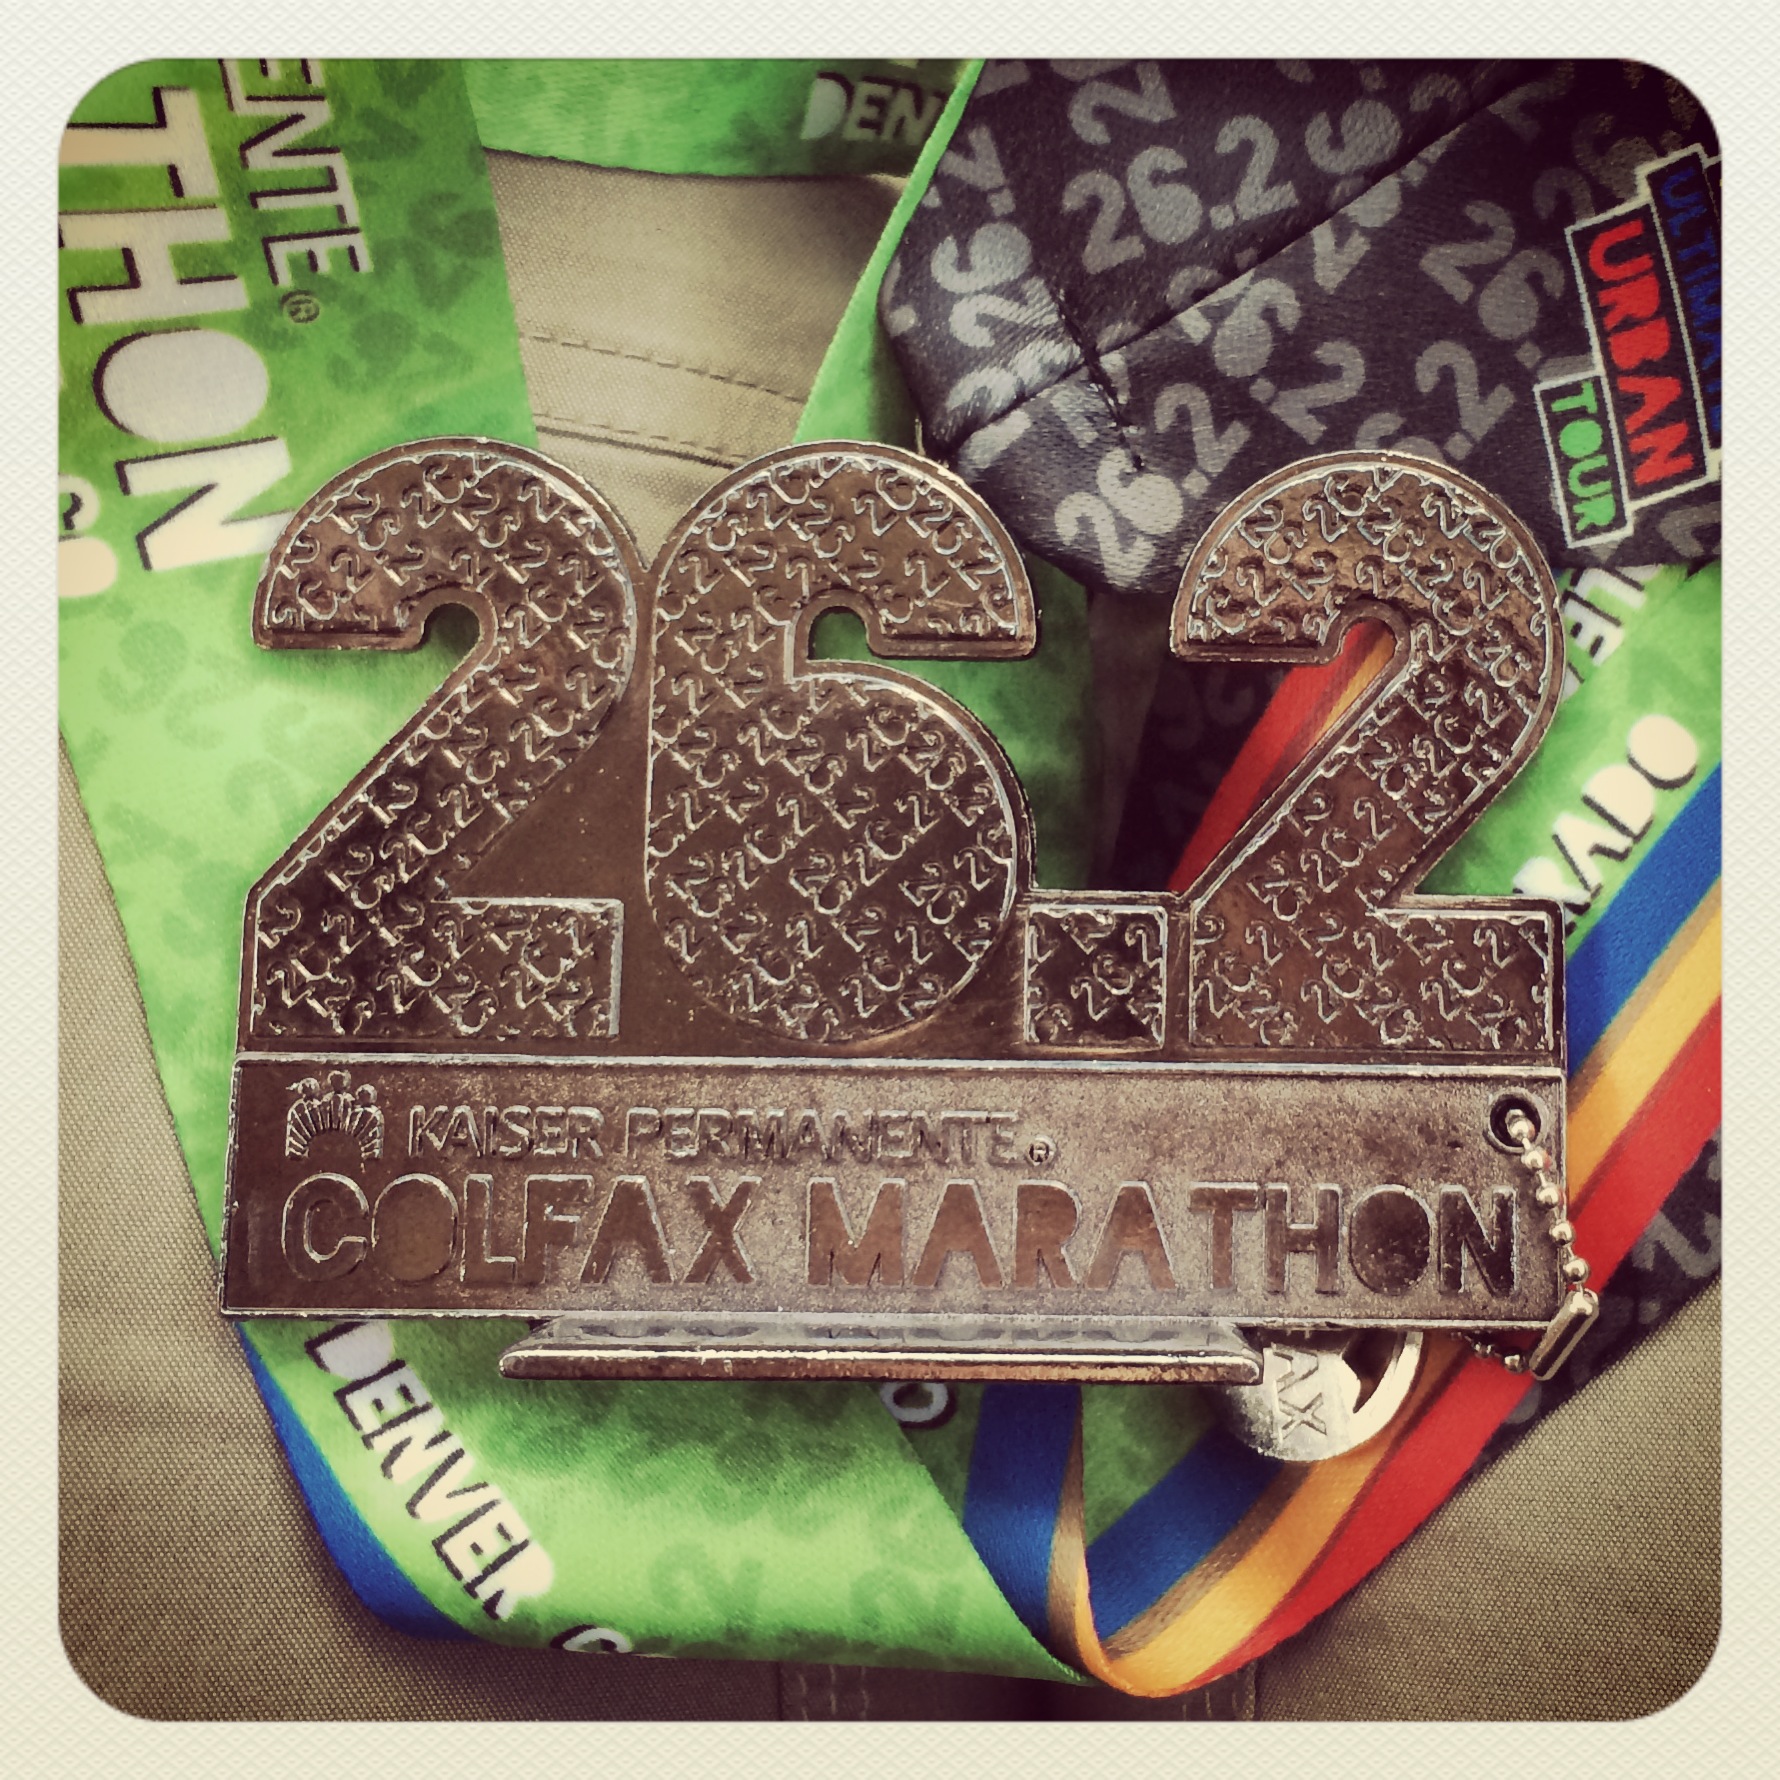 Colfax Marathon…check!